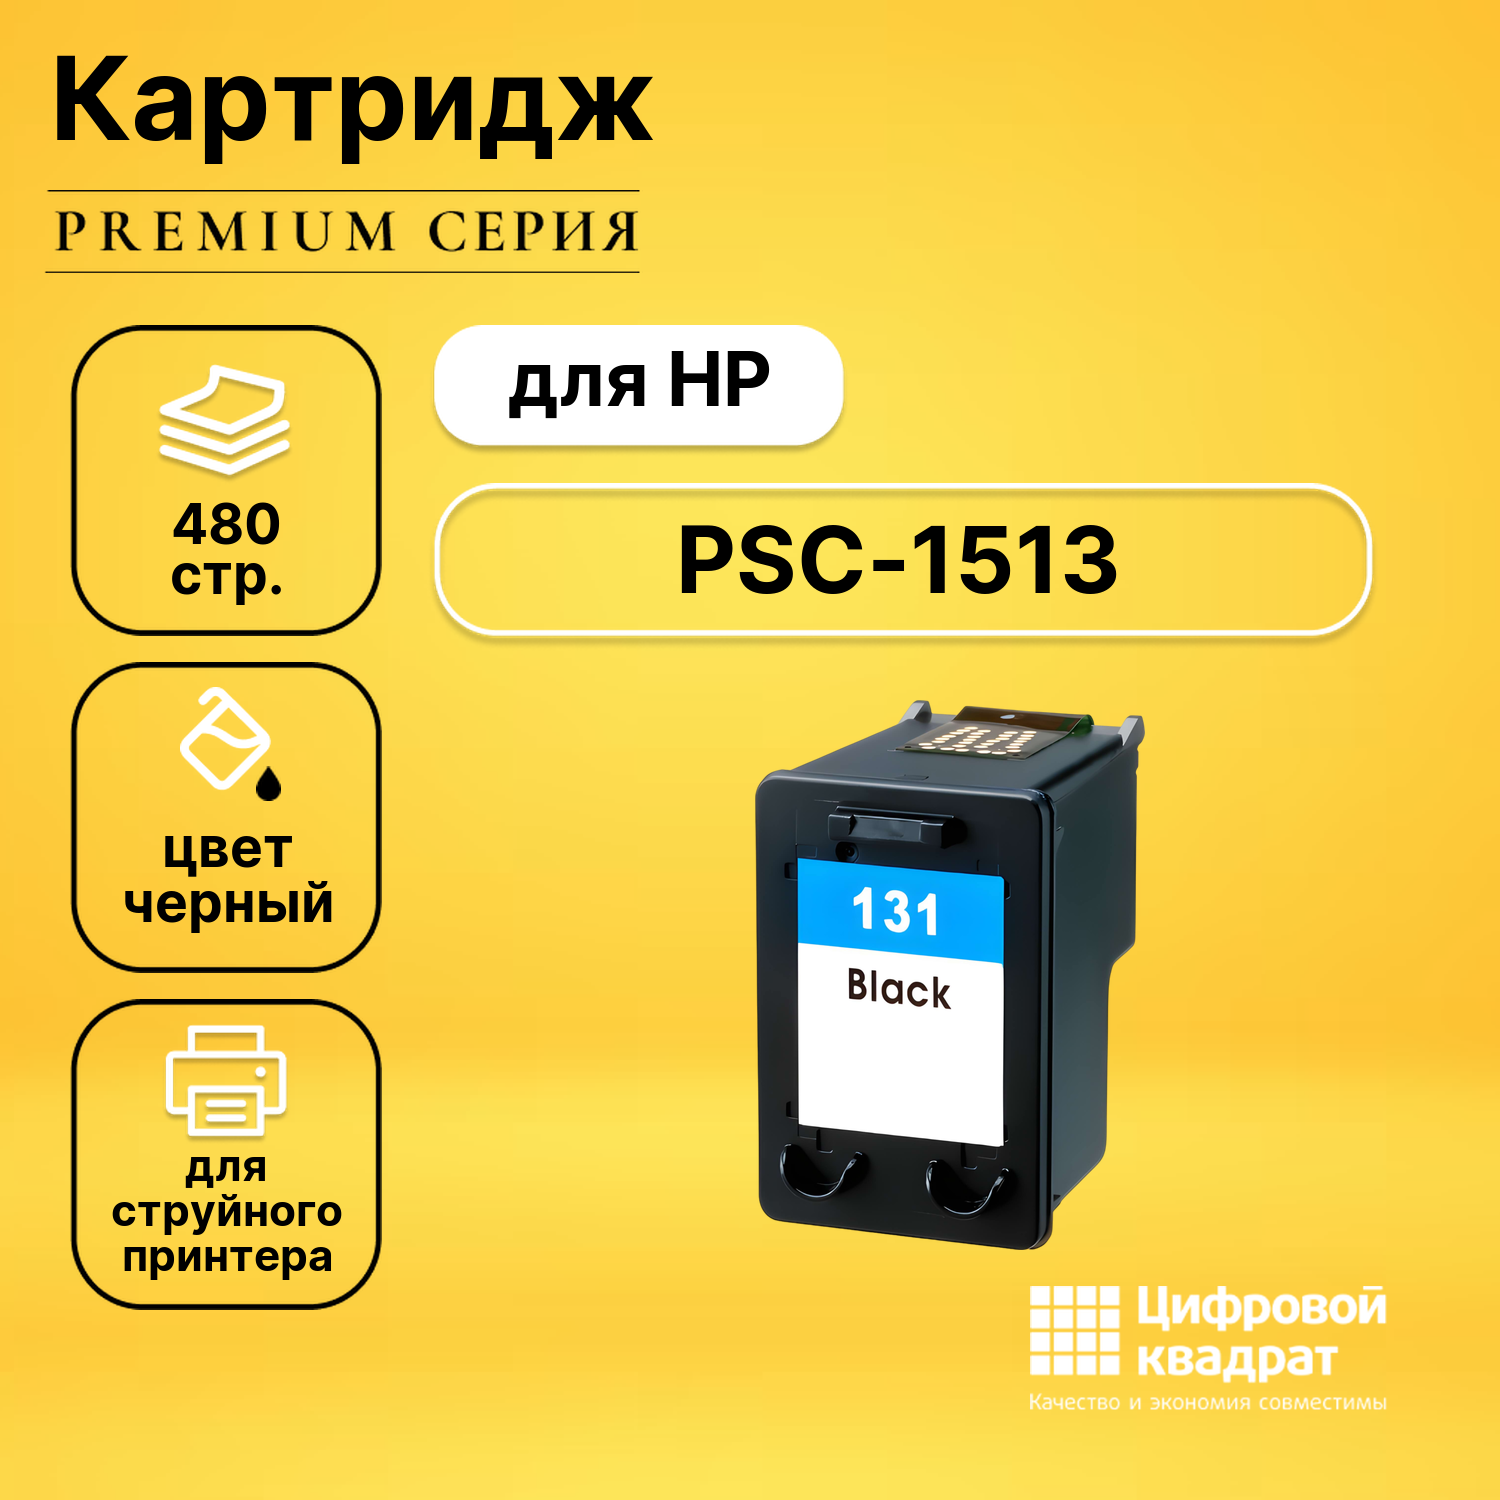 Картридж DS для HP PSC-1513 совместимый